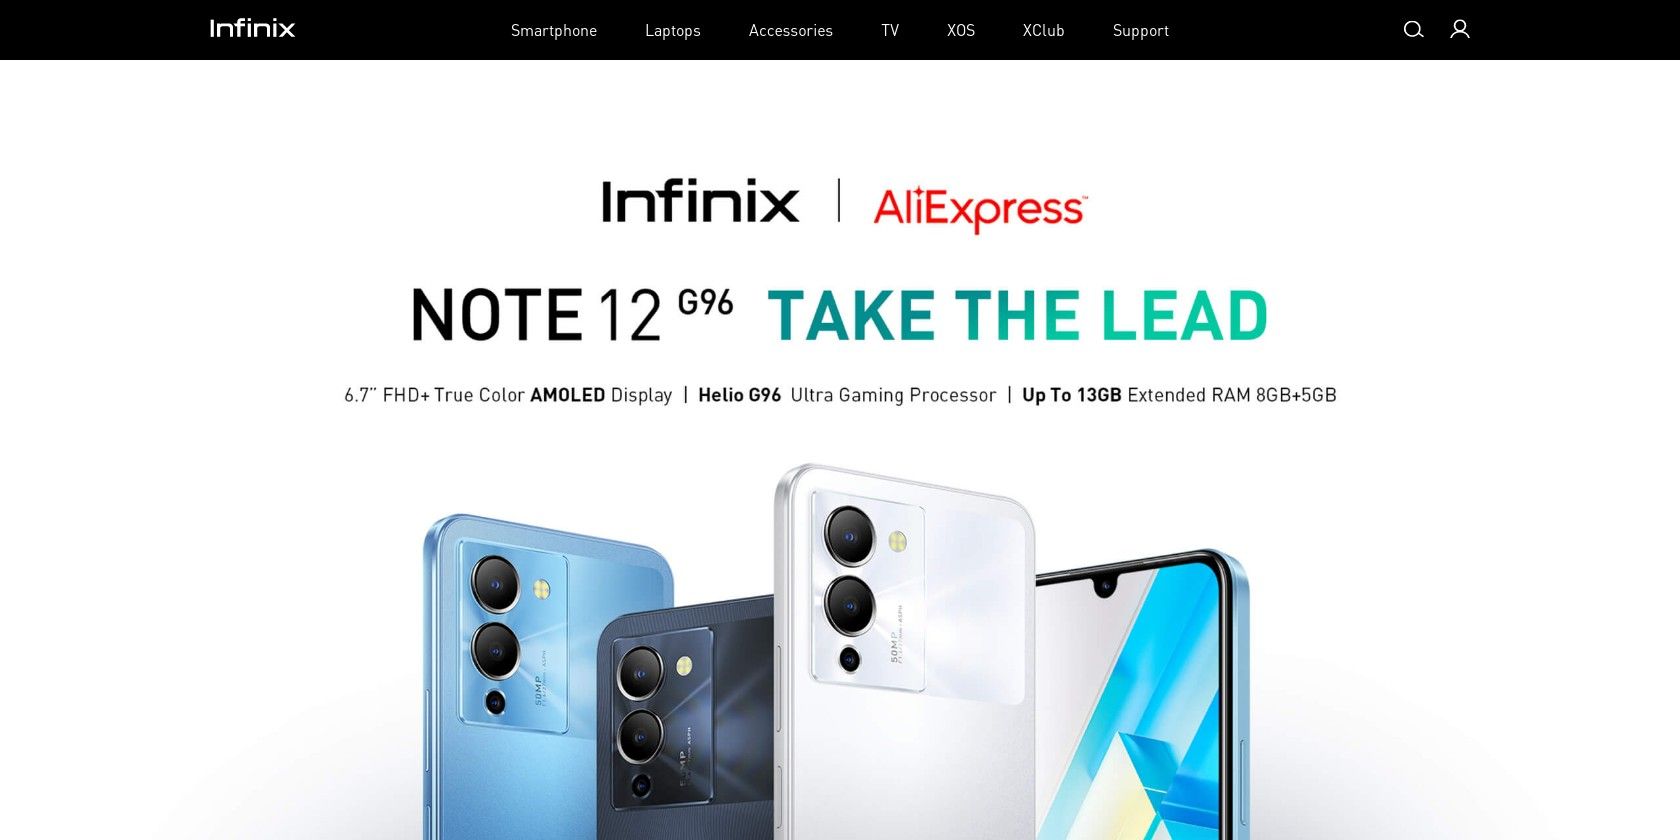 Infinix smartphone brand